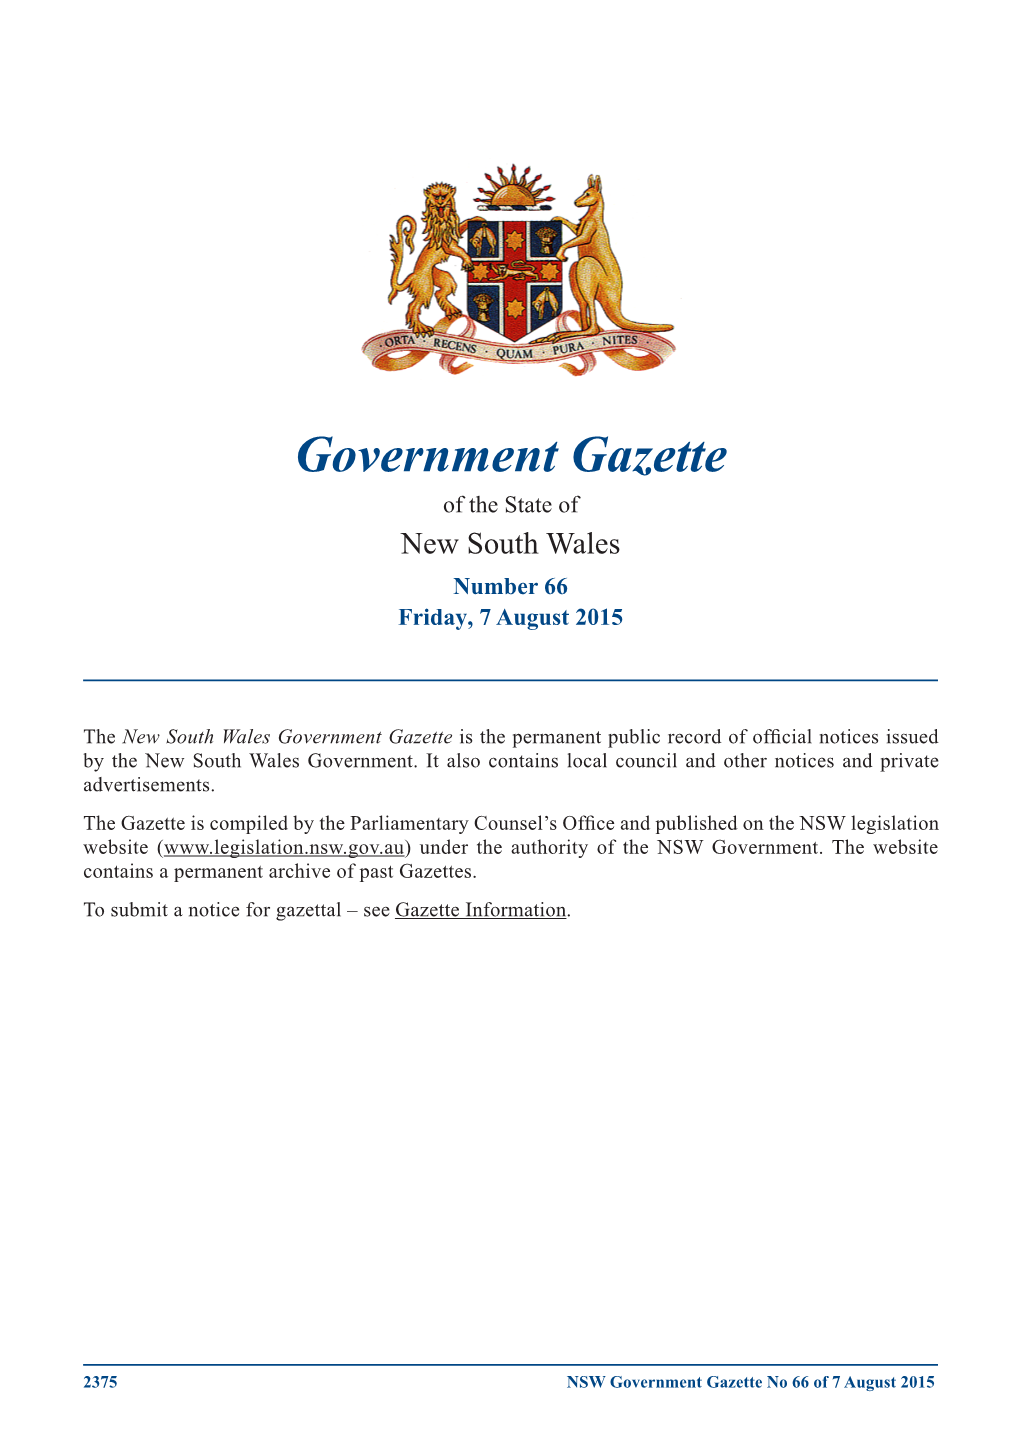 Government Gazette No 66 of 7 August 2015